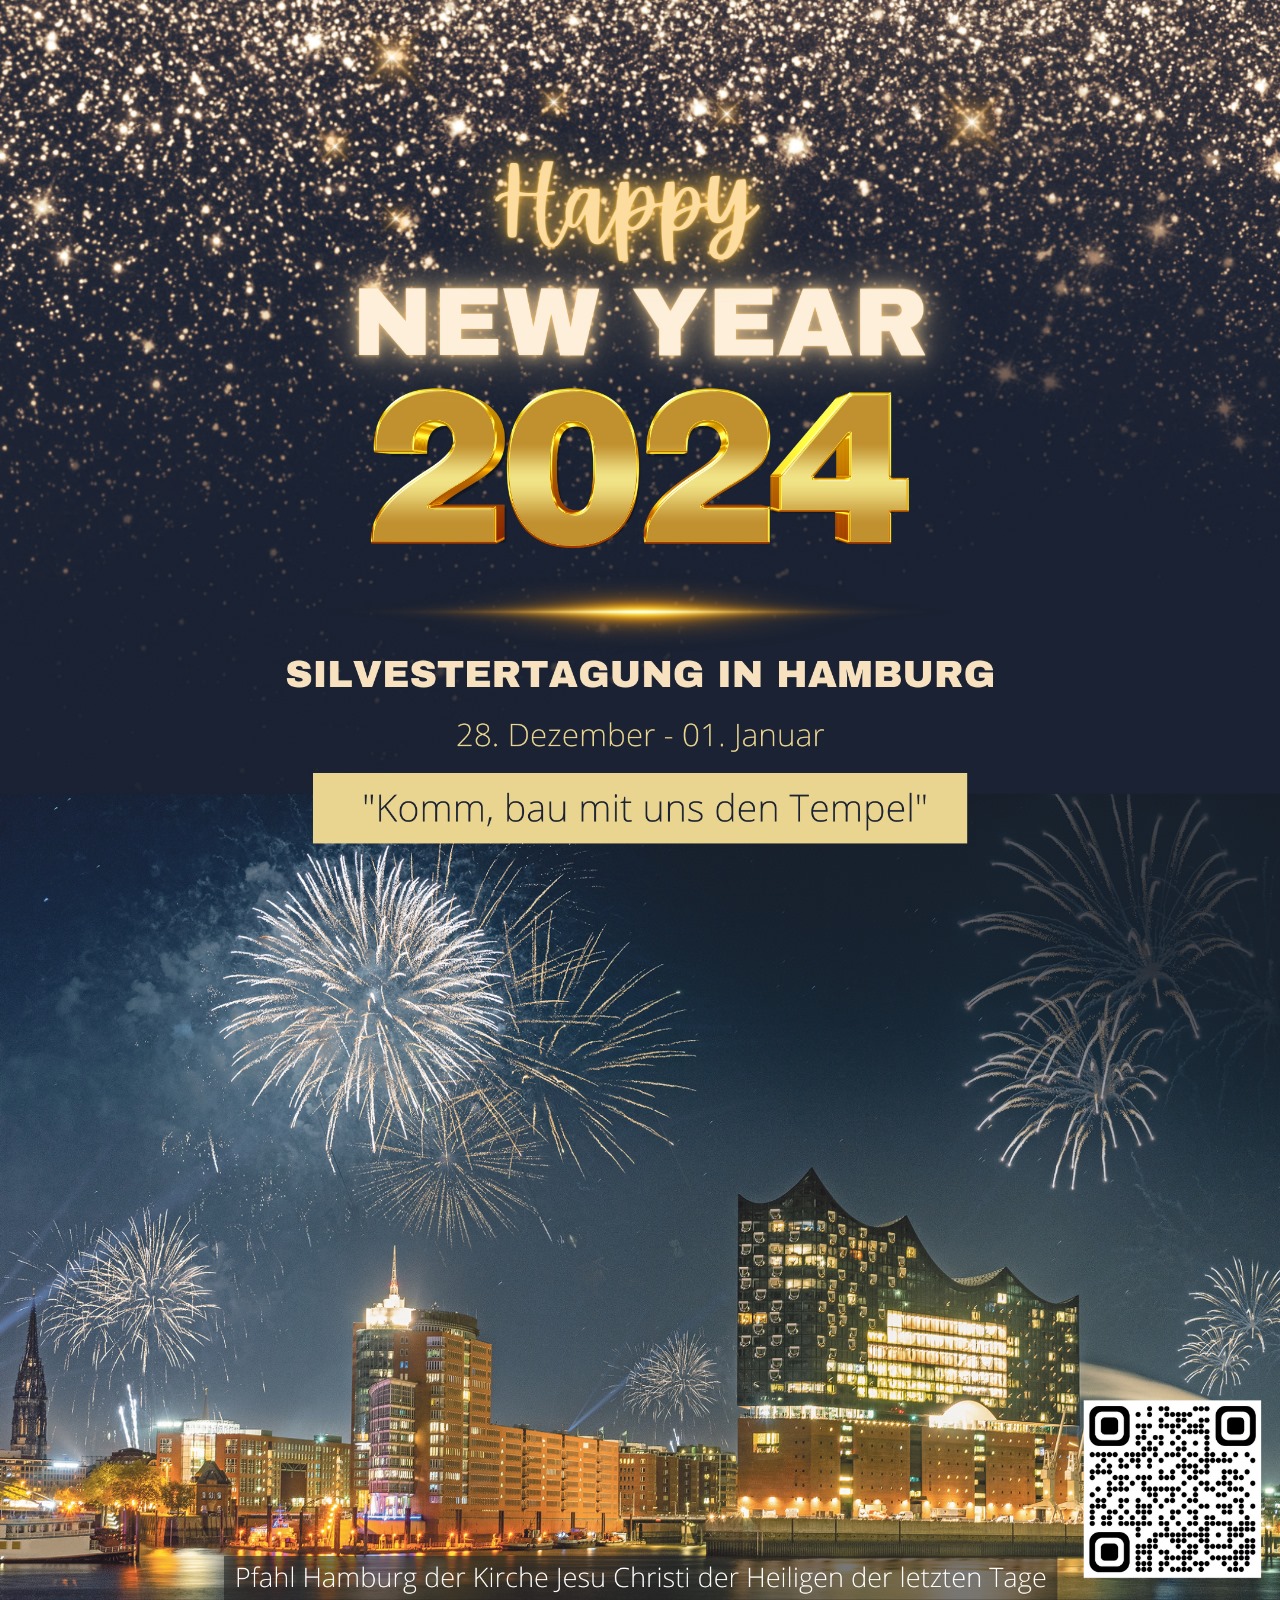 Silvestertagung Hamburg (New Year’s convention in Hamburg)